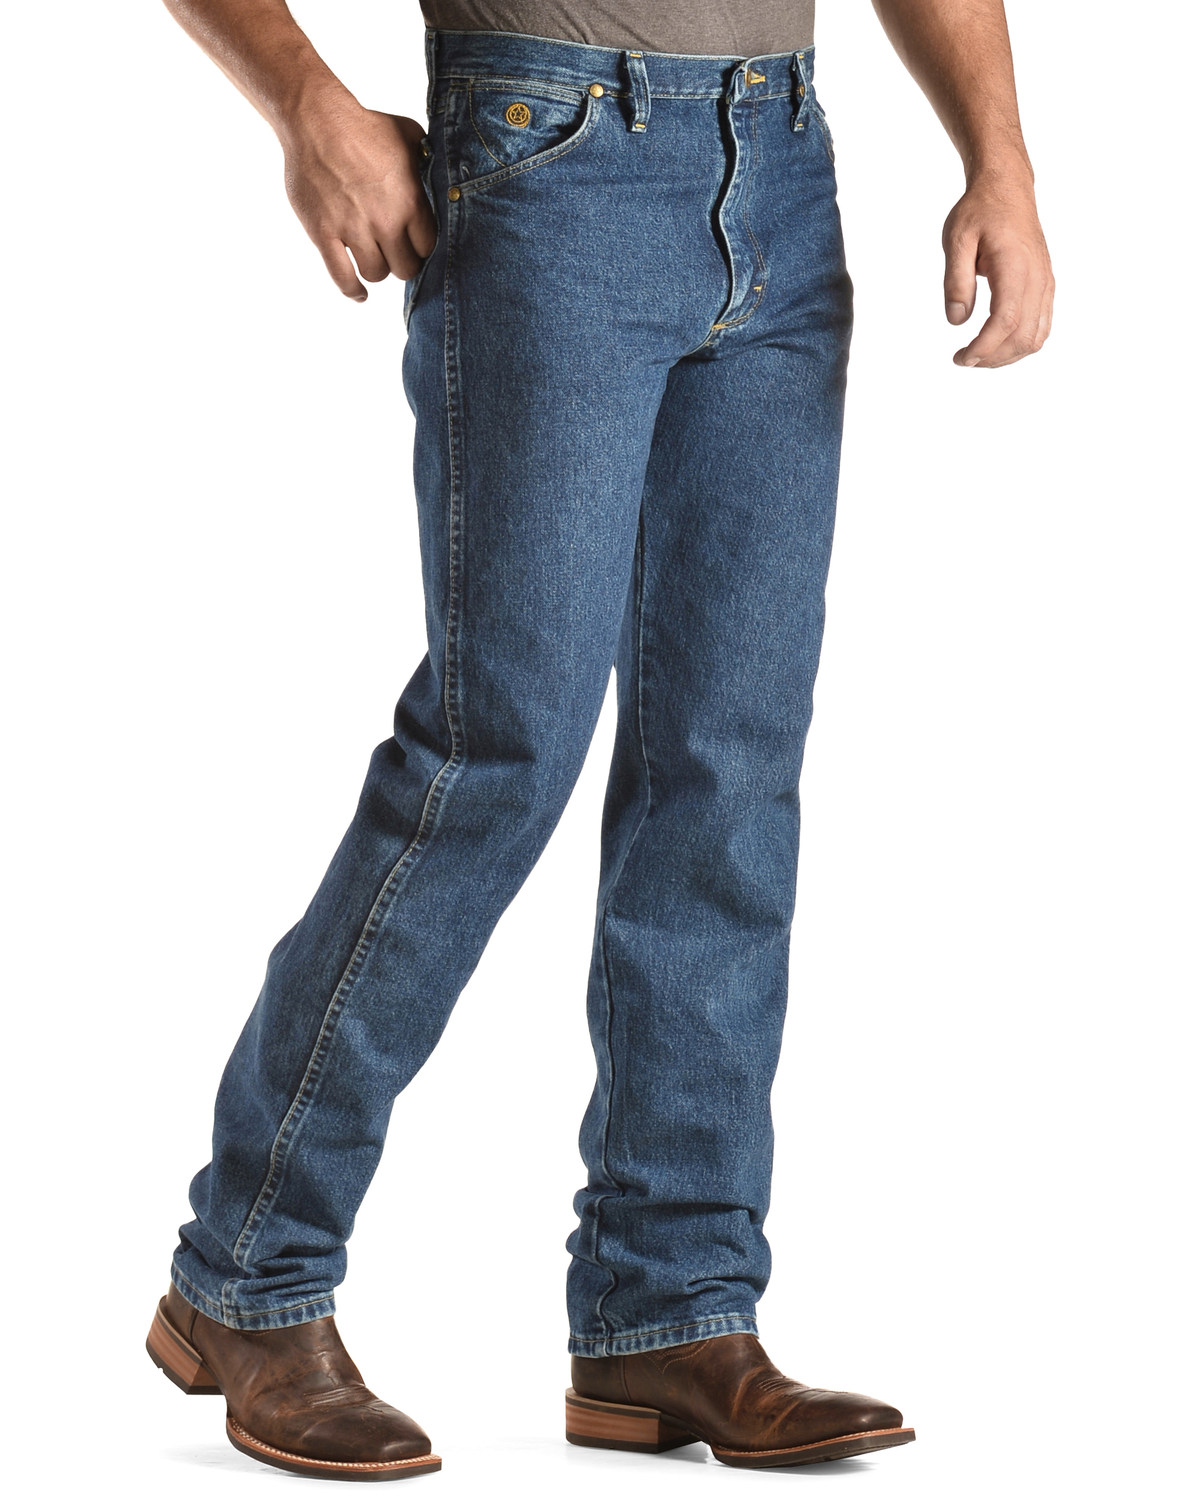 Wrangler George Strait Cowboy Cut Original Fit Jeans | Boot Barn